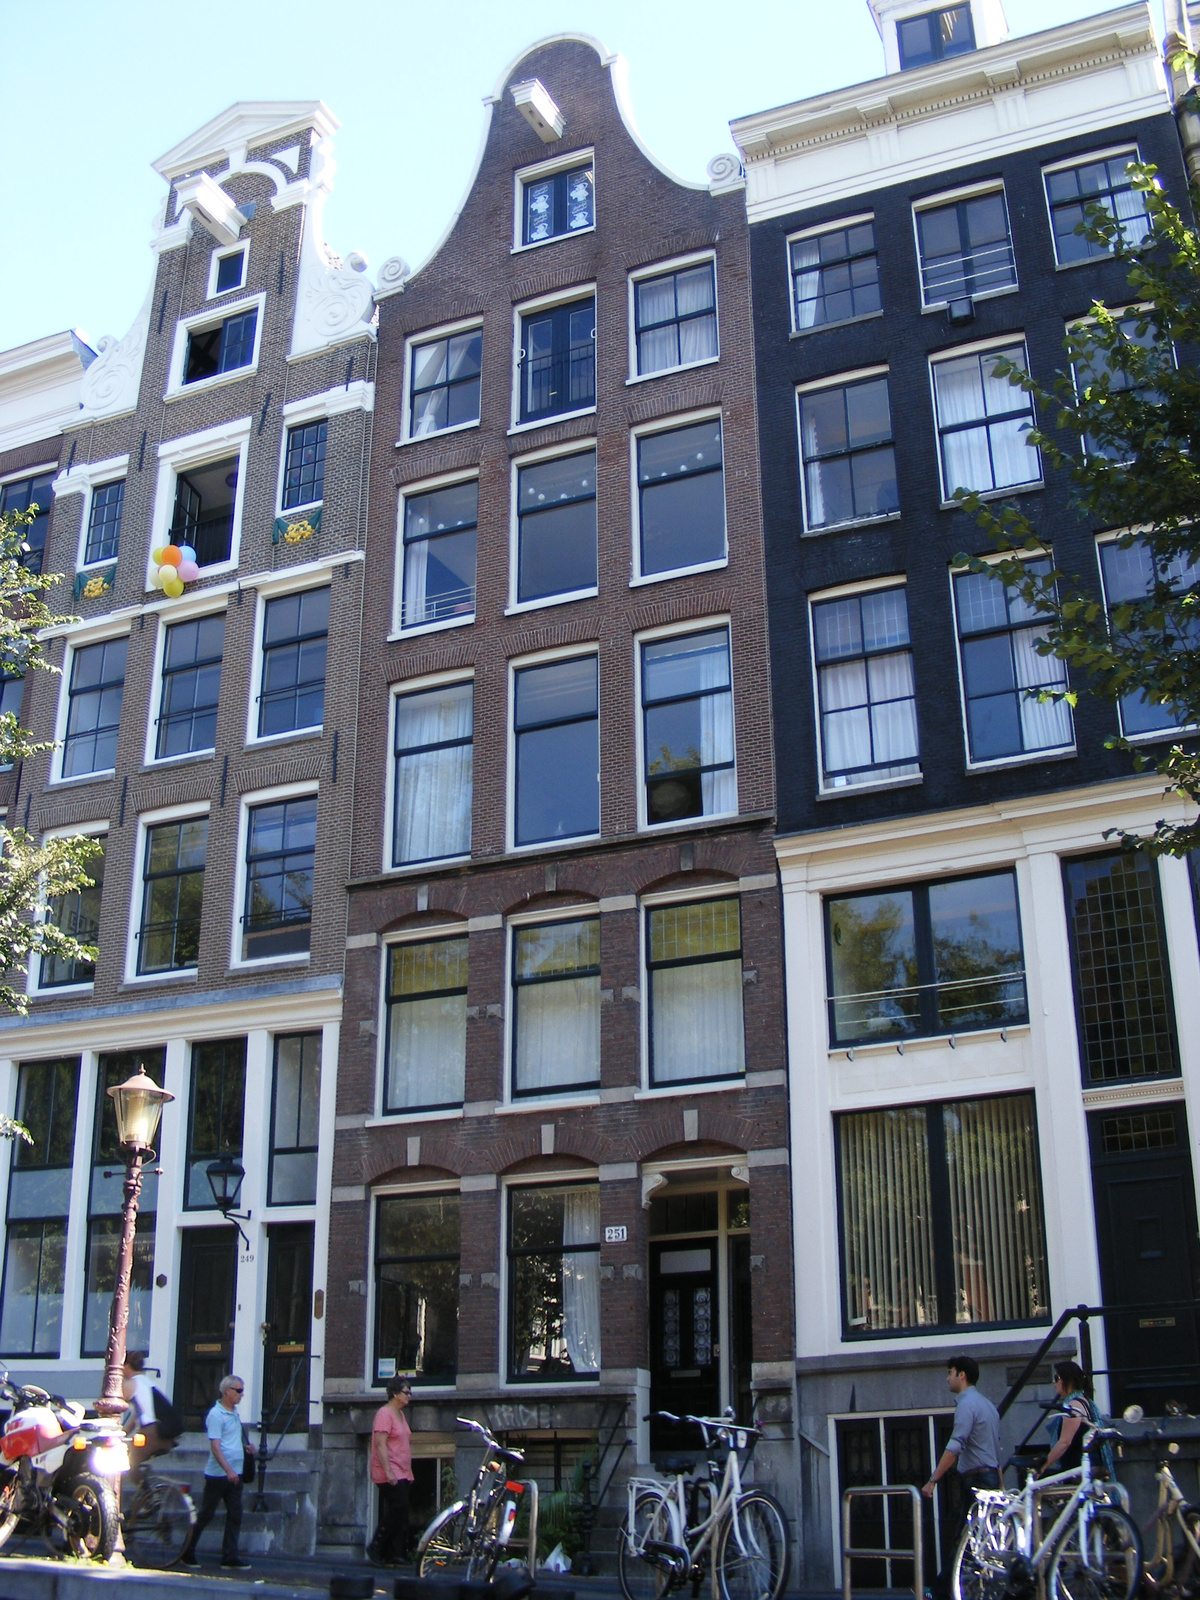 20120909 Amszterdam(B) 26